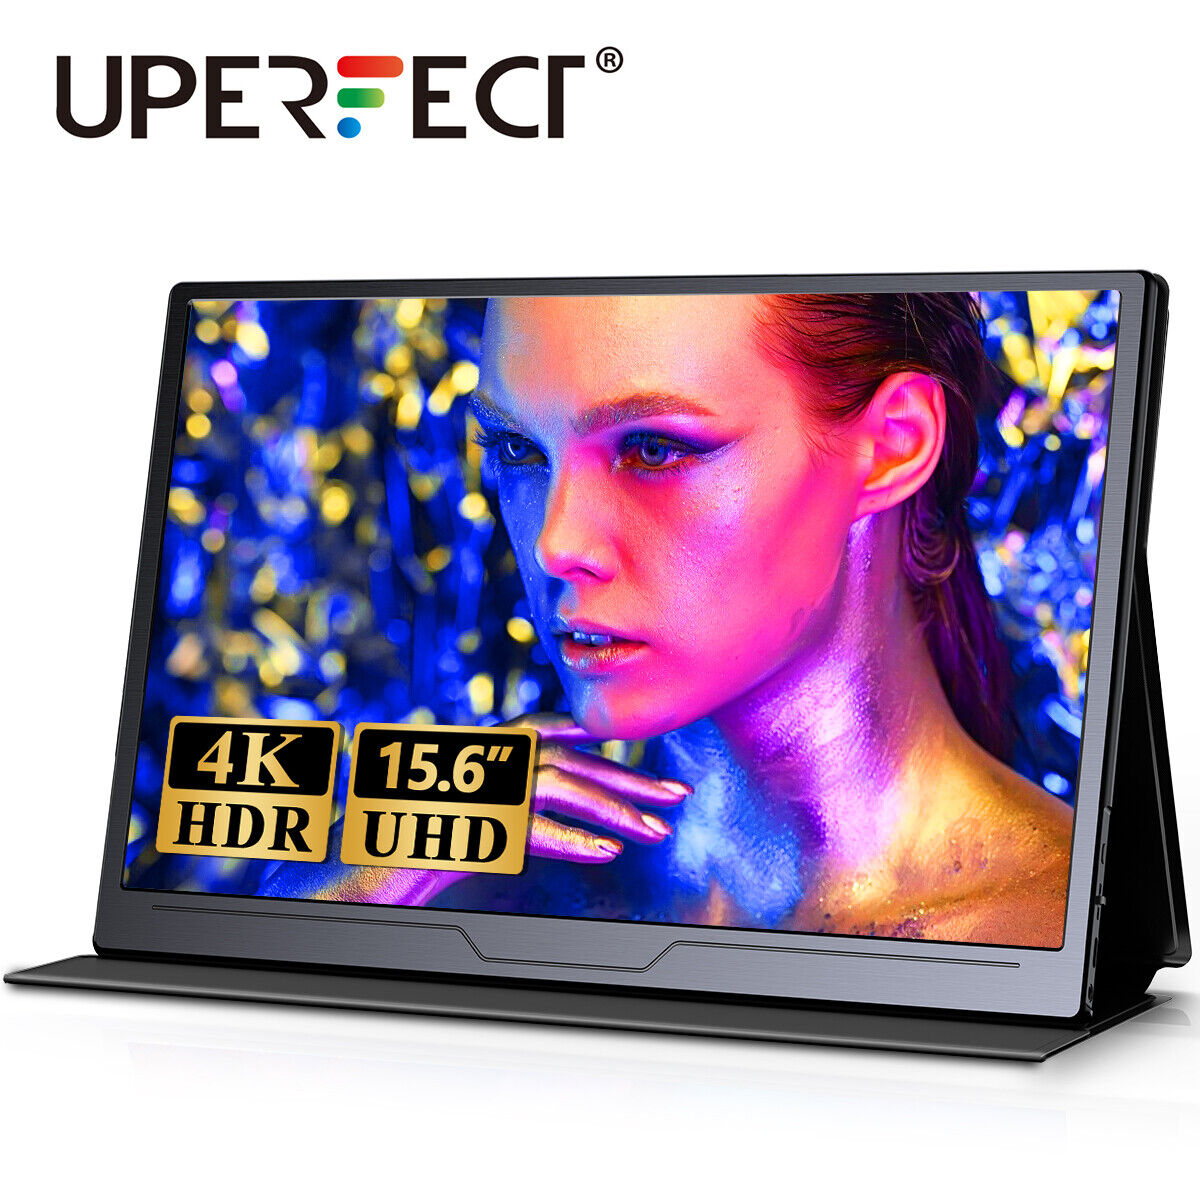 4K IPS LED Portable Monitor - 15.6 NTSC 72% 99% Adobe RGB 400 Nits Brightness US